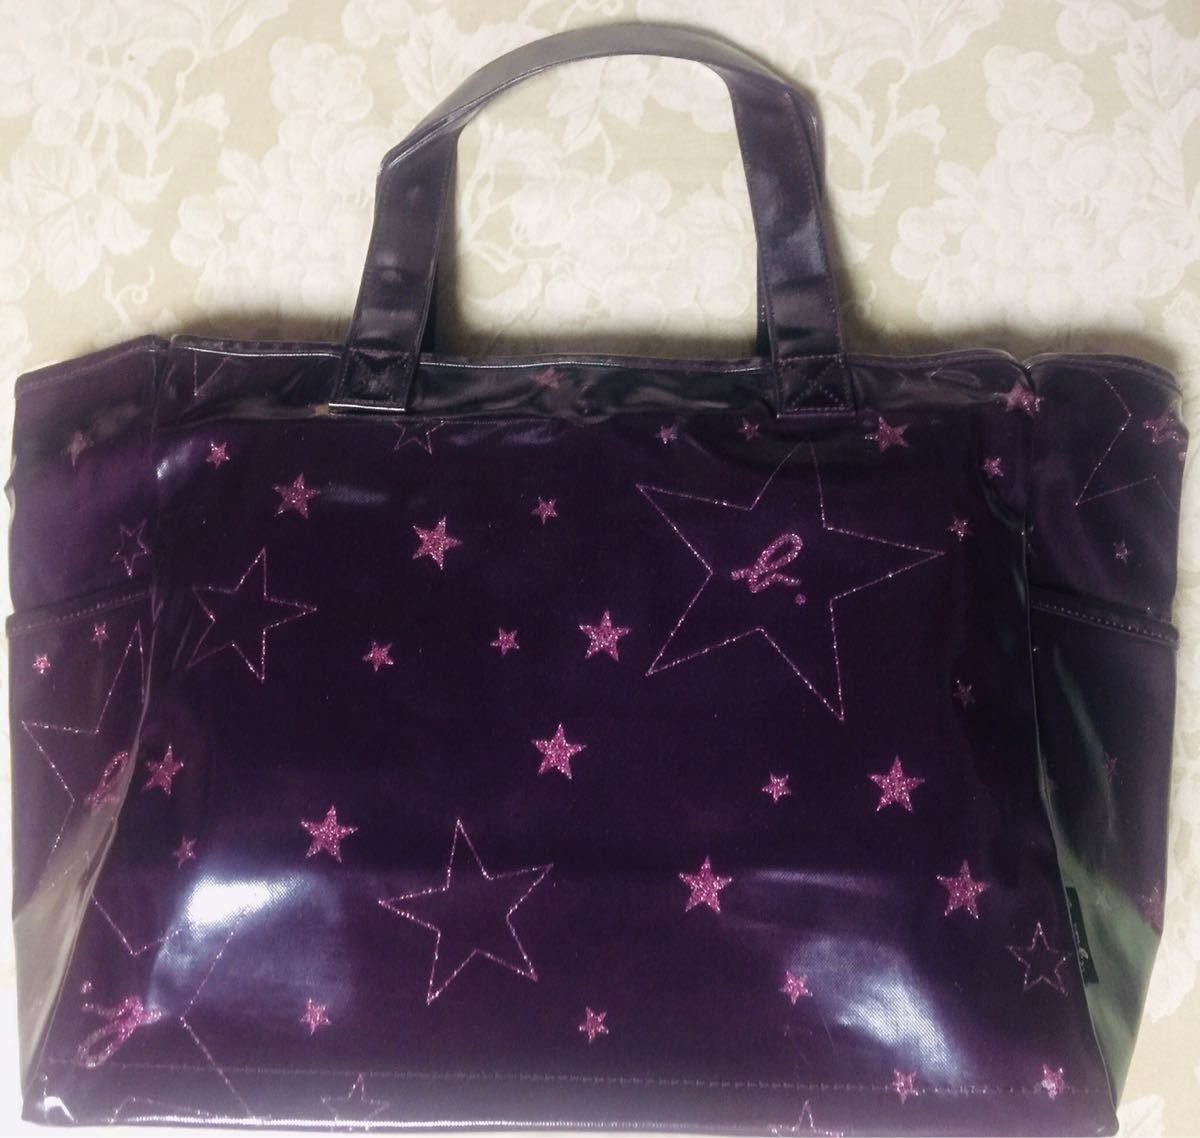 Agnes b tote bag (purple)